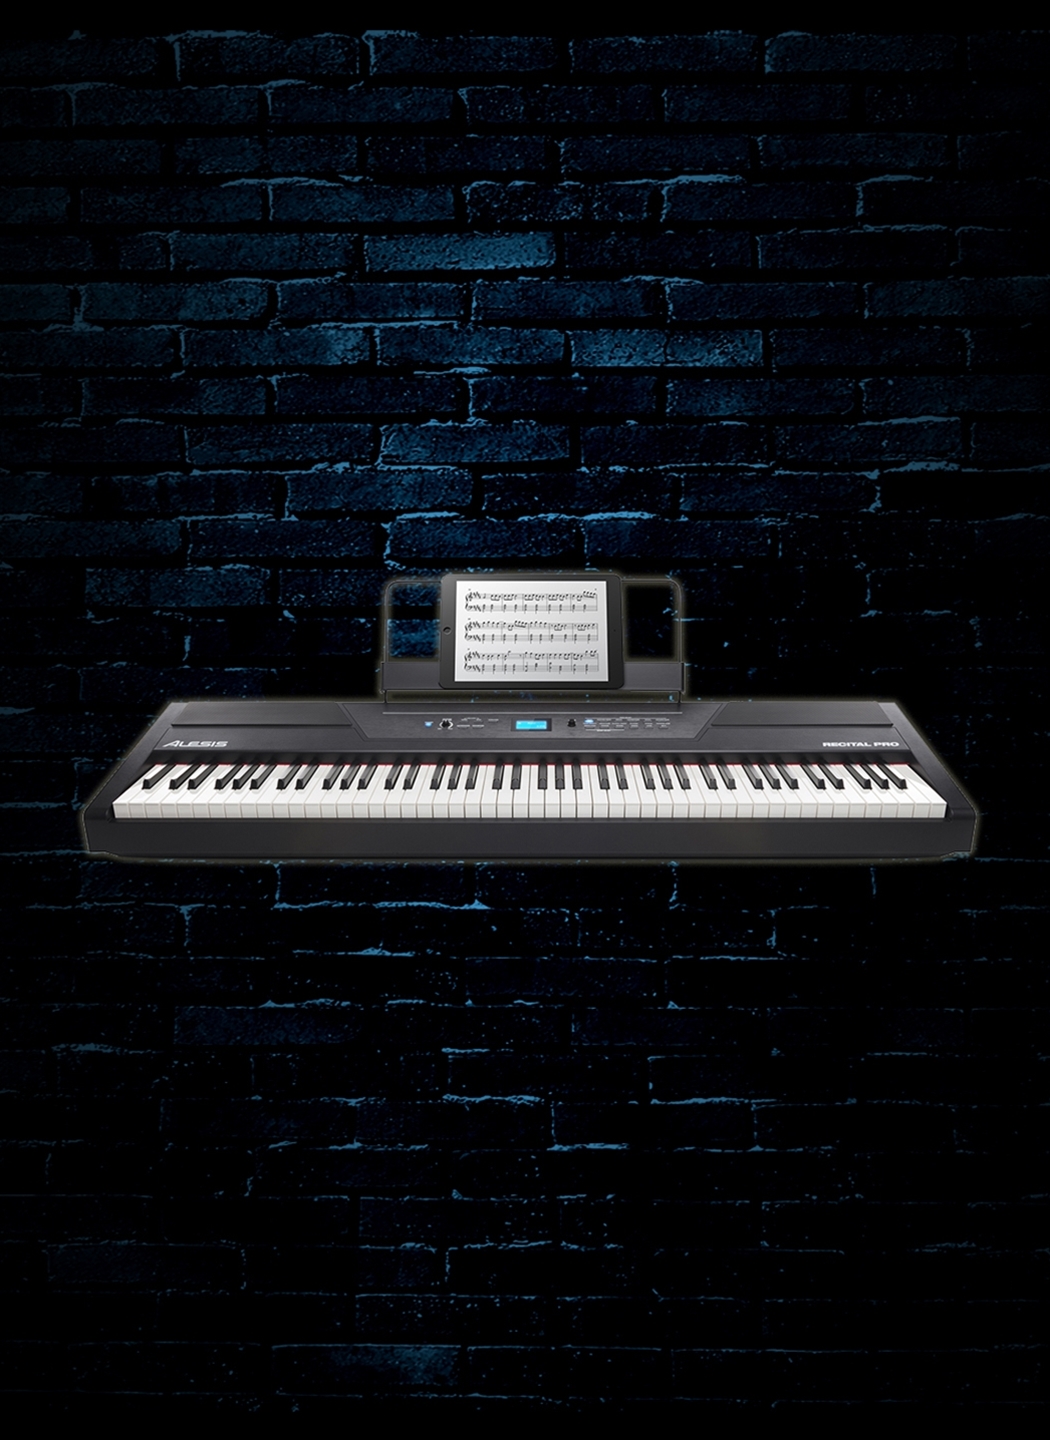 New ALESIS RECITAL PRO Digital Pianos